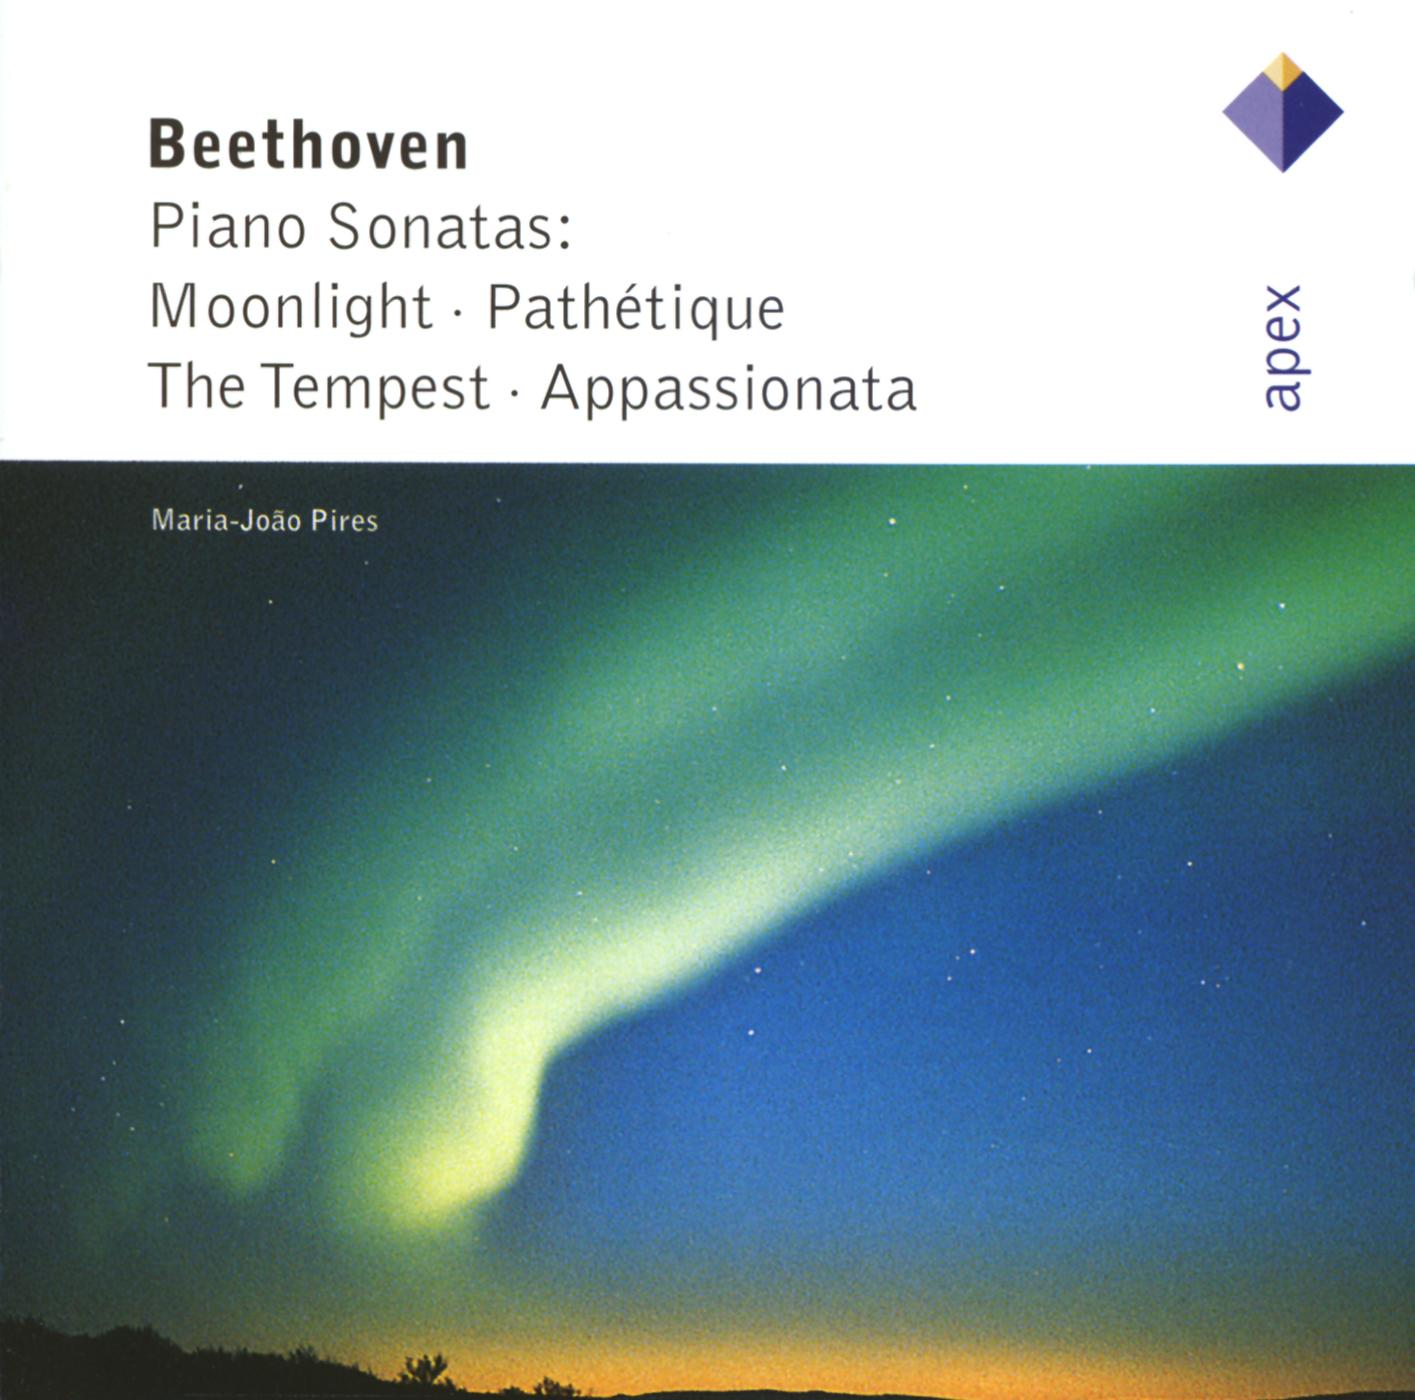 Piano Sonata No. 14 in C-Sharp Minor, Op. 27 No. 2 "Moonlight":I. Adagio sostenuto